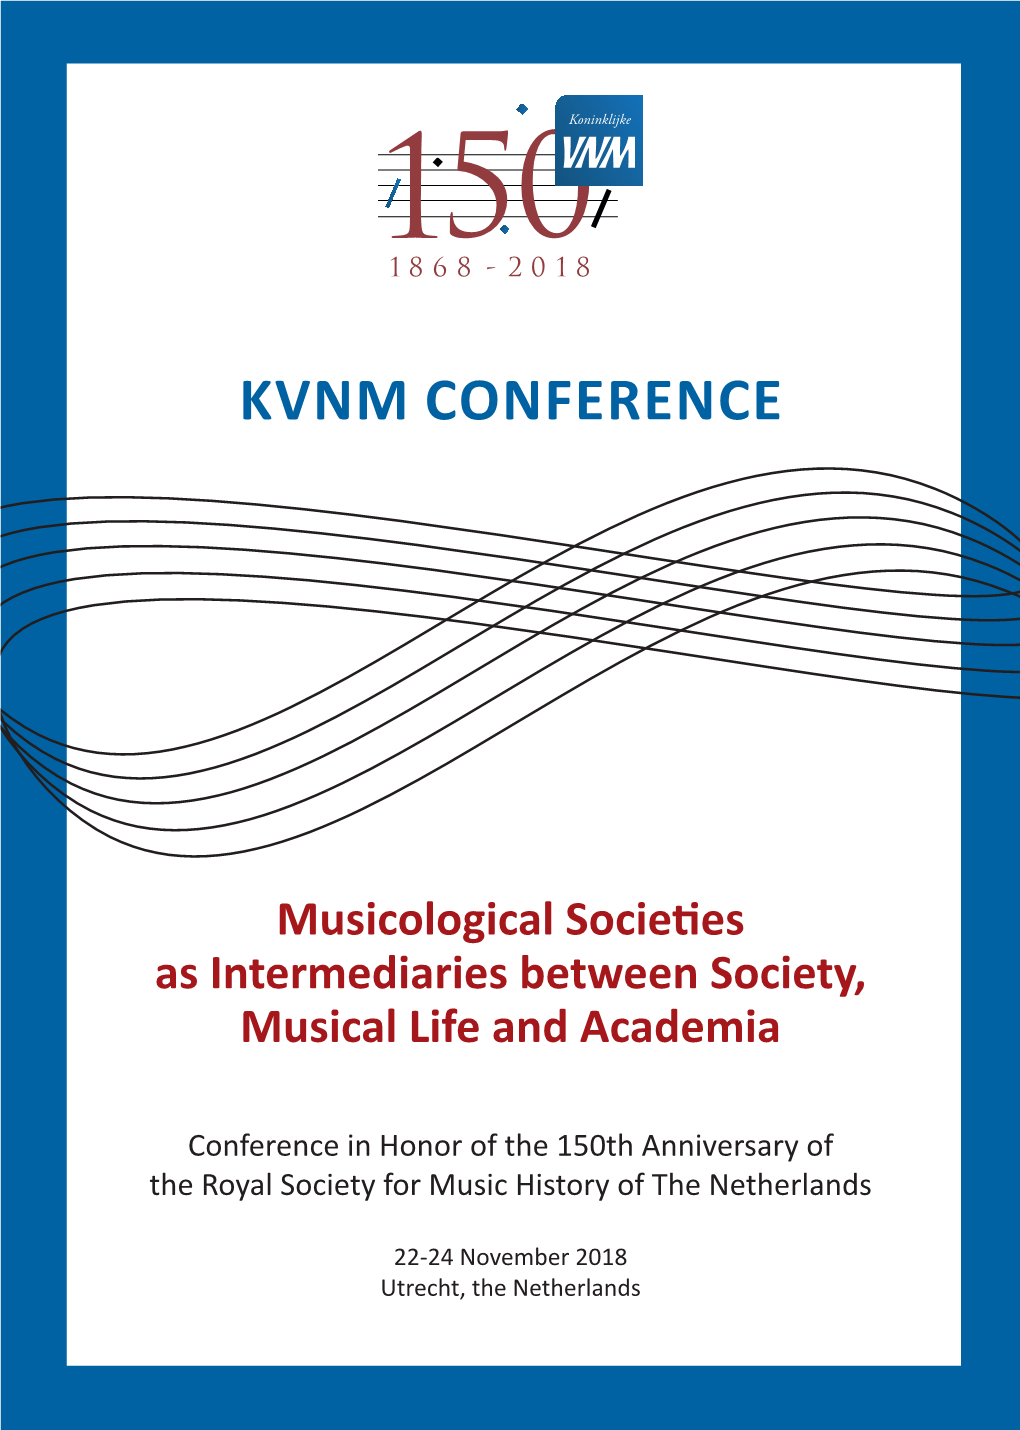 KVNM Conference Program